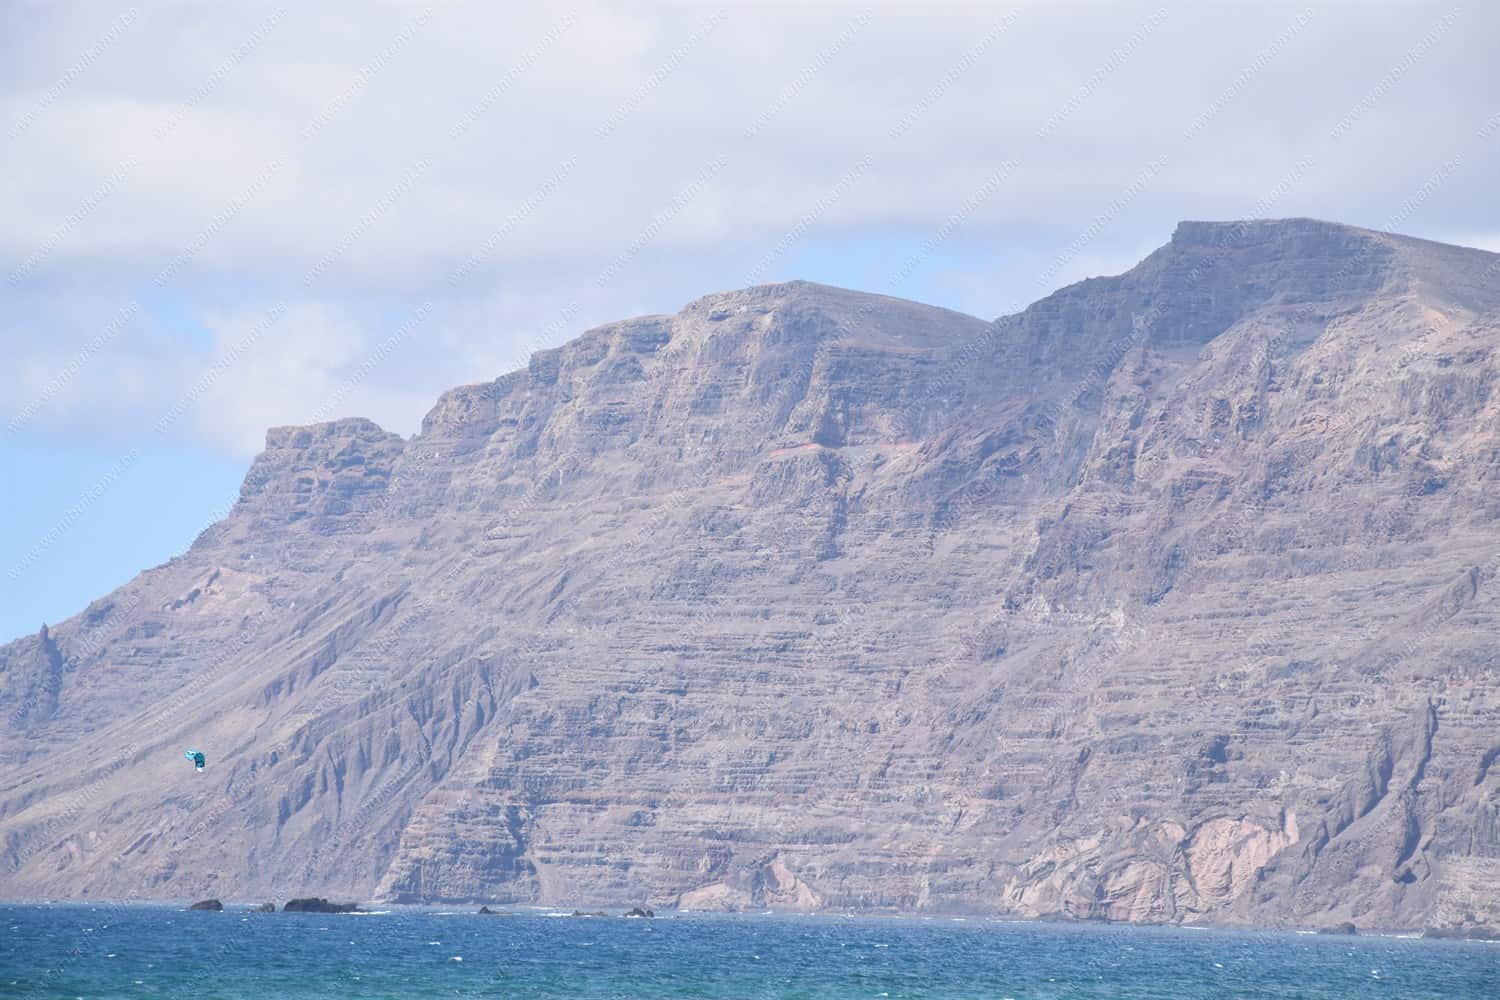 The cliffs of the Famara